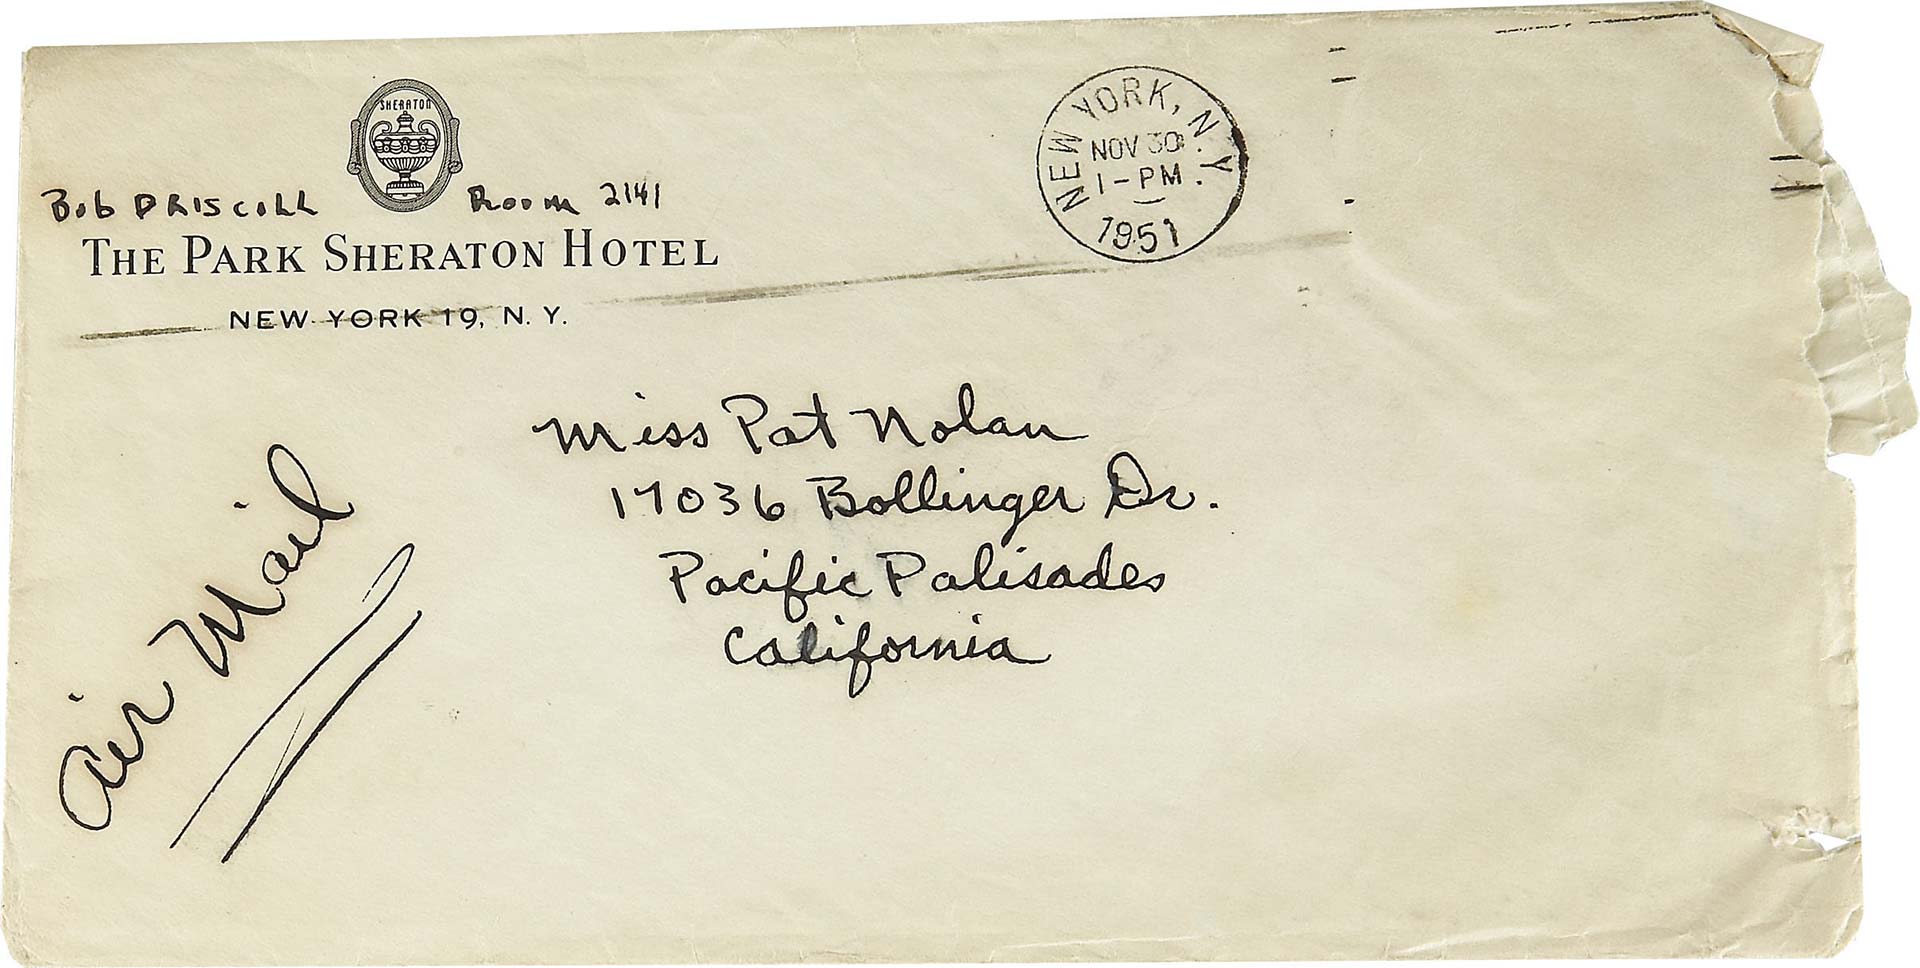 Bobby Driscoll’s Letter to Patricia Nolan – November 30, 1951